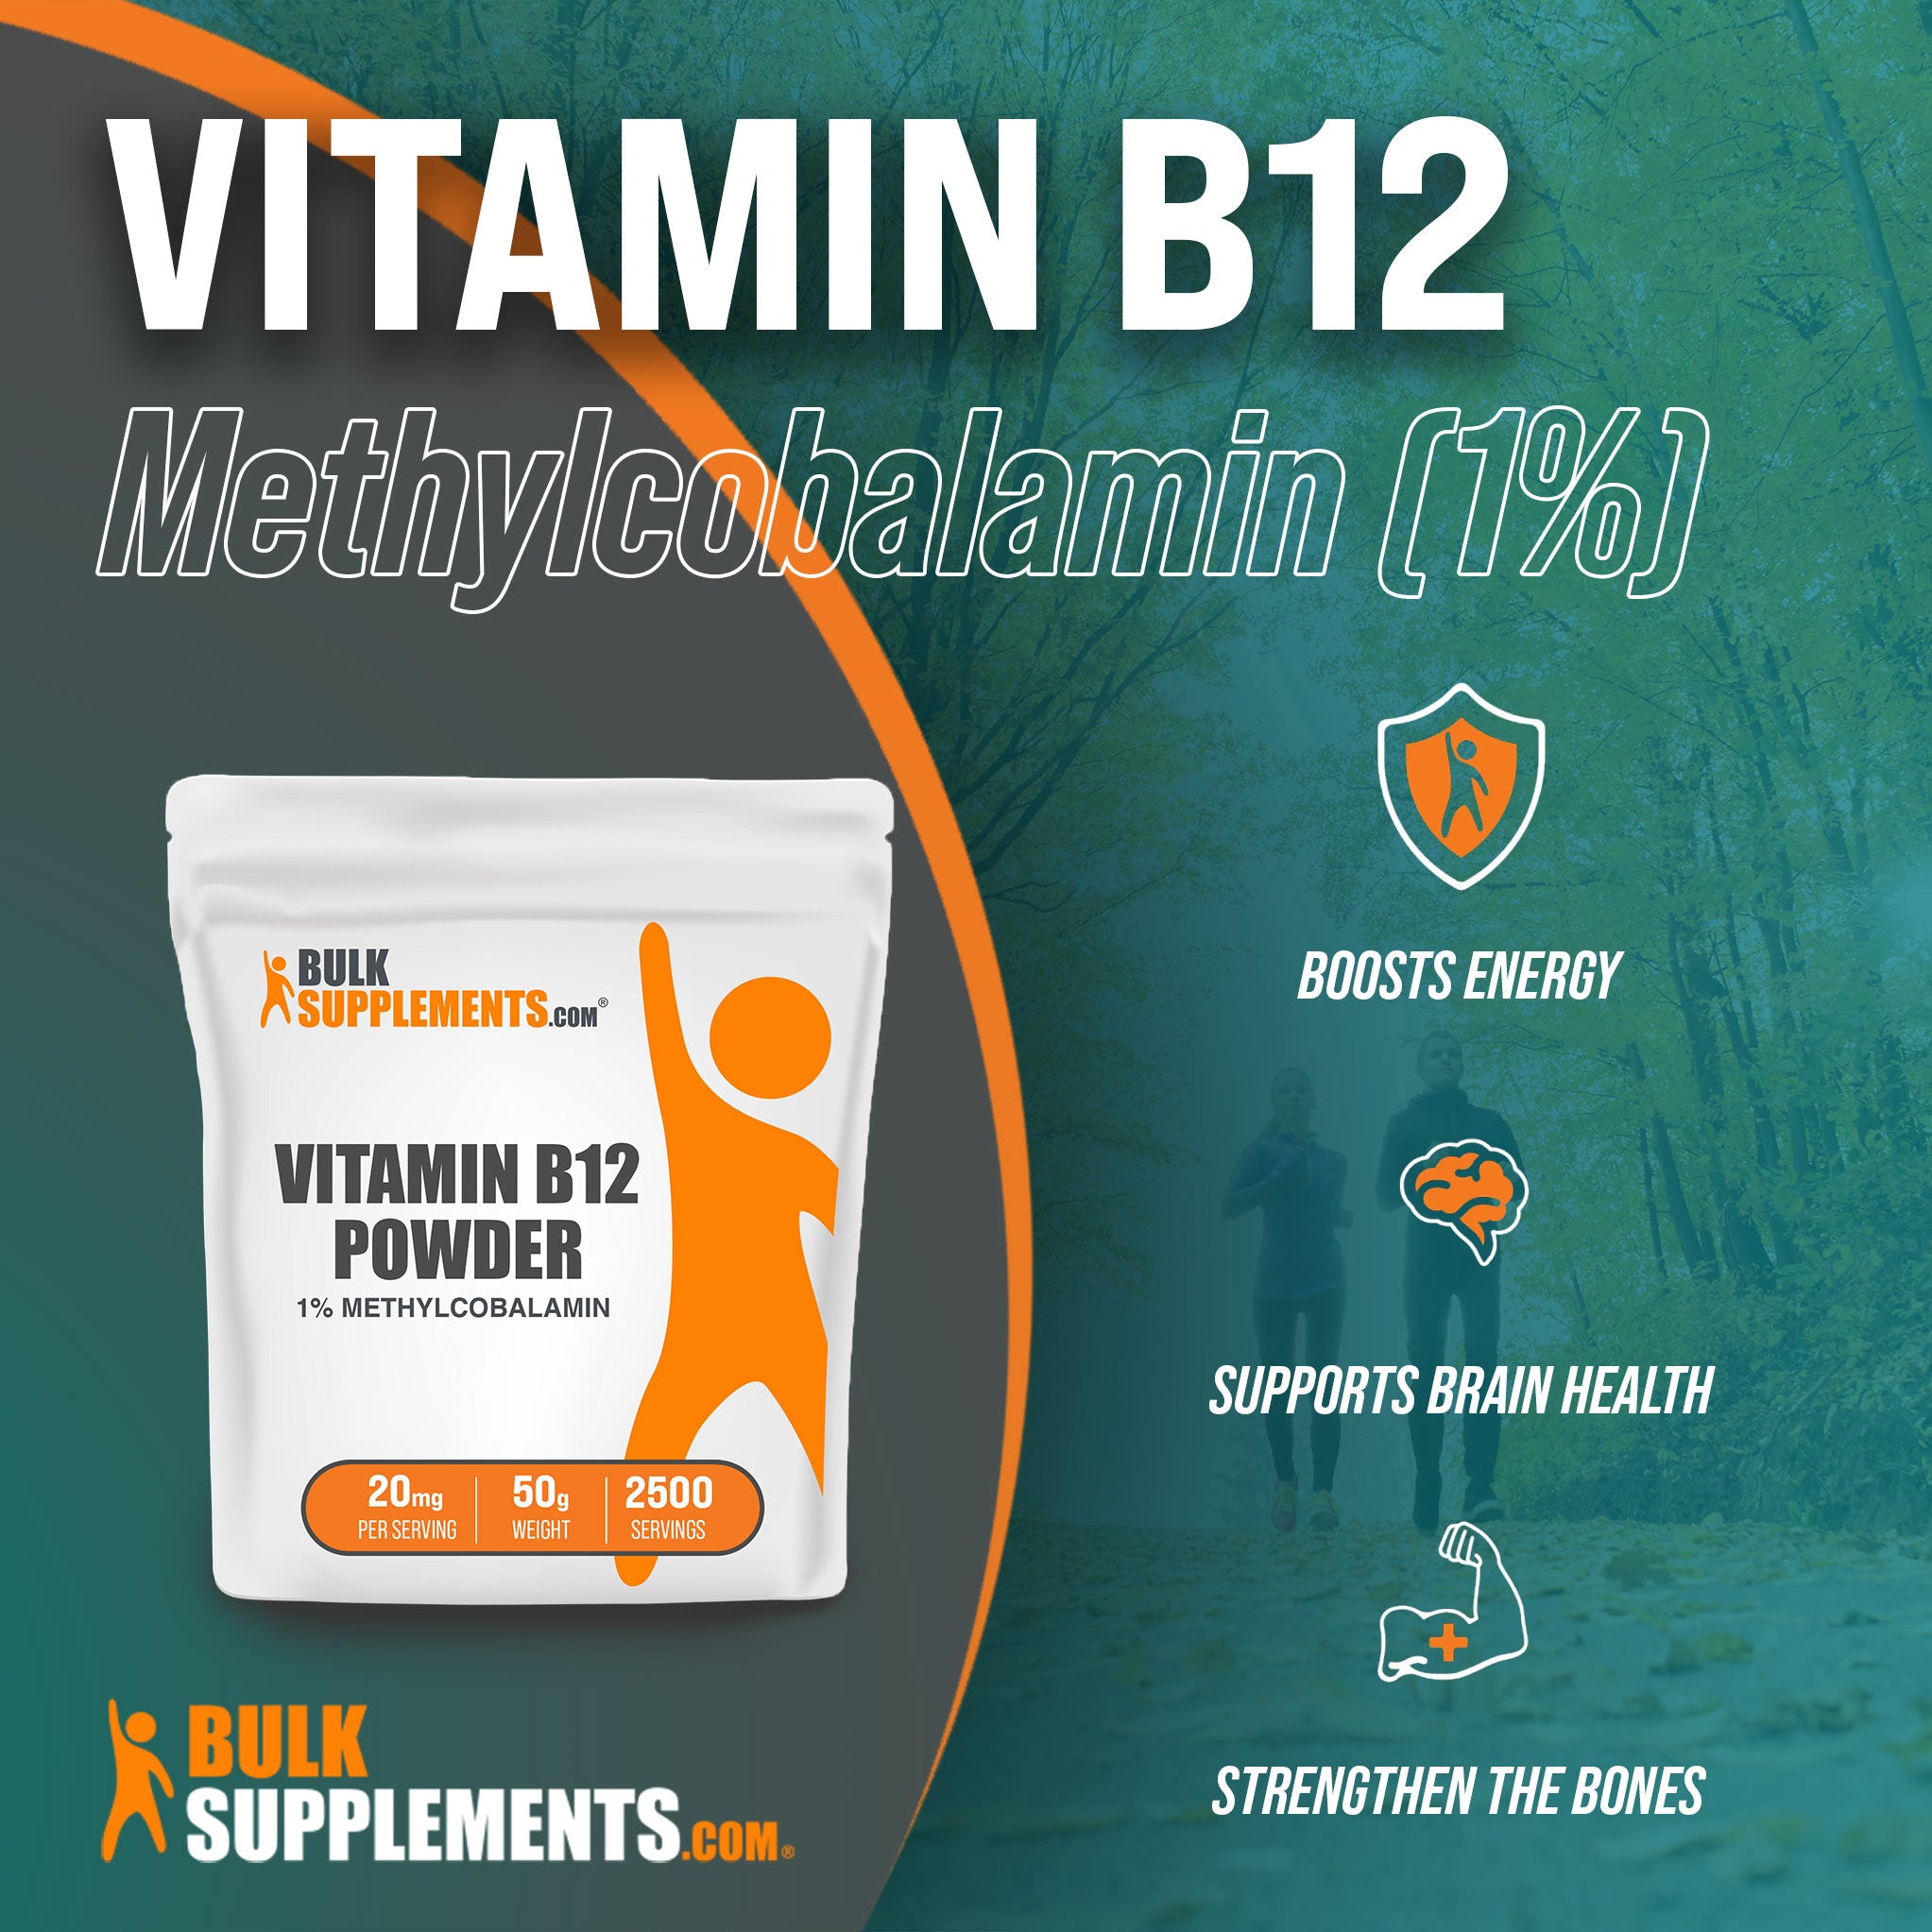 Benefits of Vitamin B12 1% Methylcobalamin: boosts energy, supports brain health, strengthen the bones